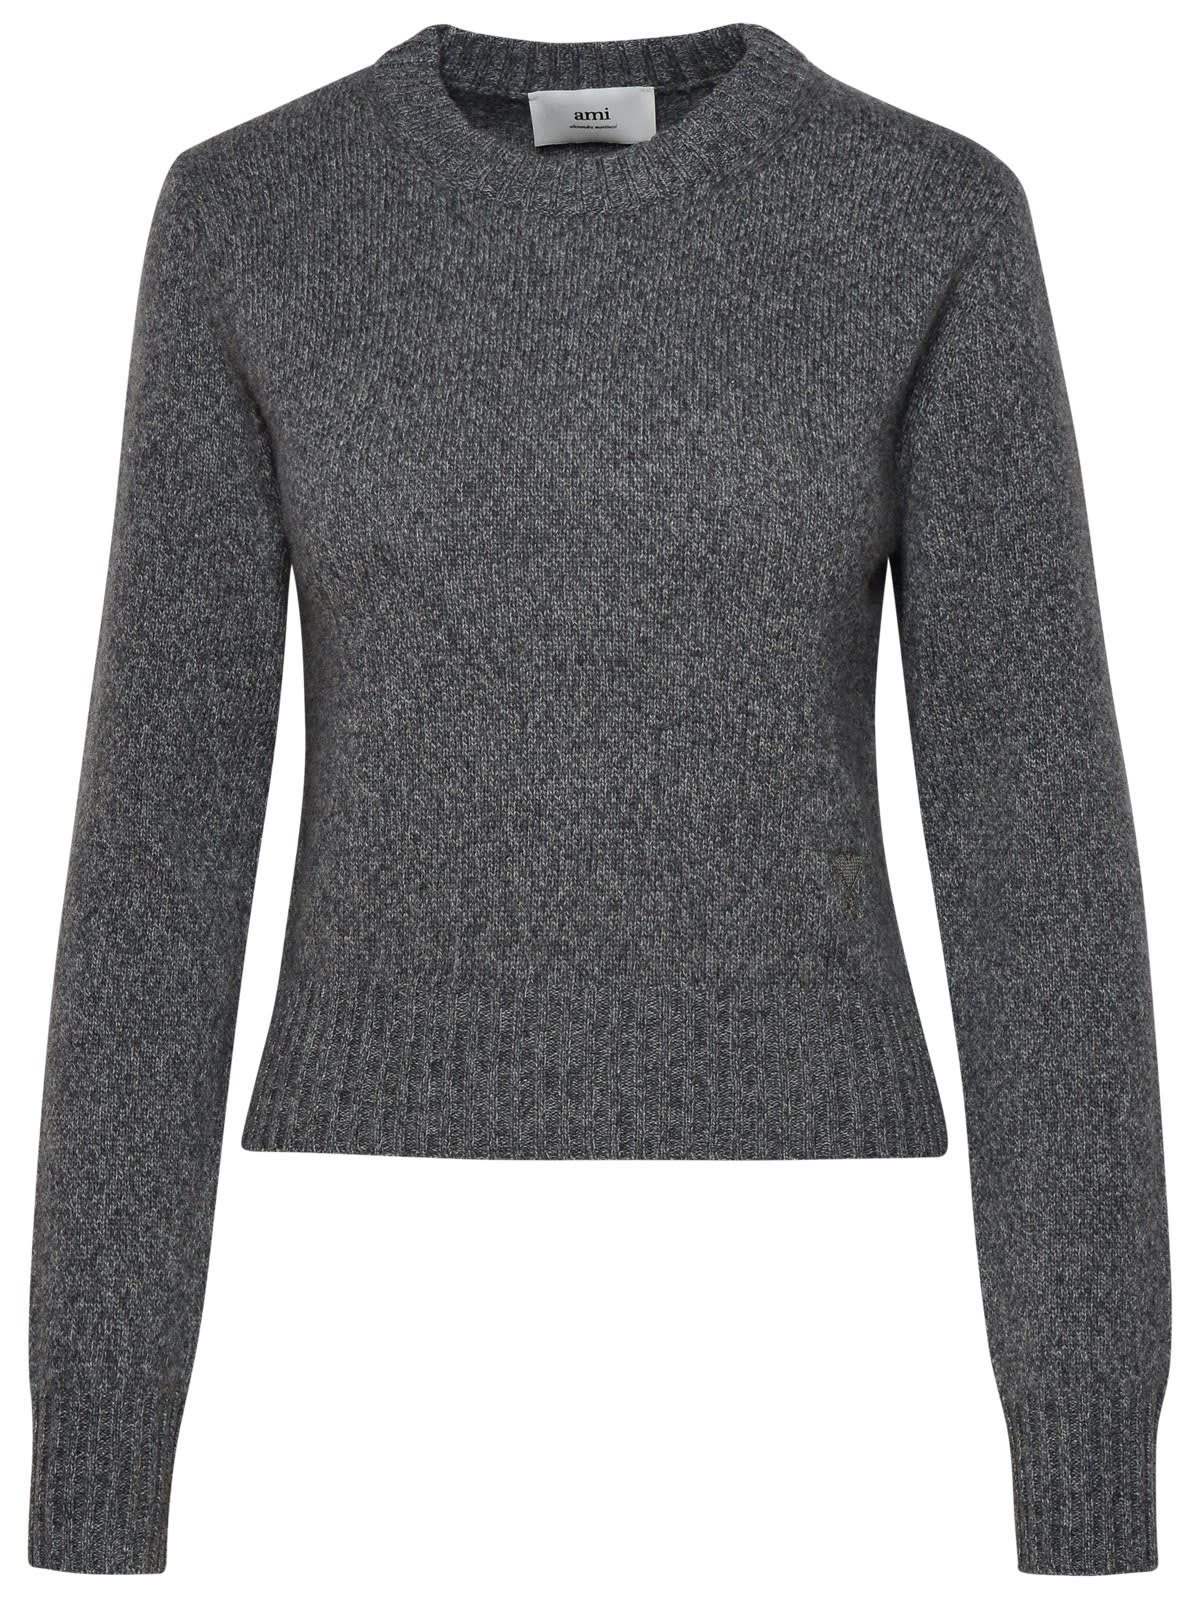 Shop Ami Alexandre Mattiussi Grey Cashmere Blend Sweater